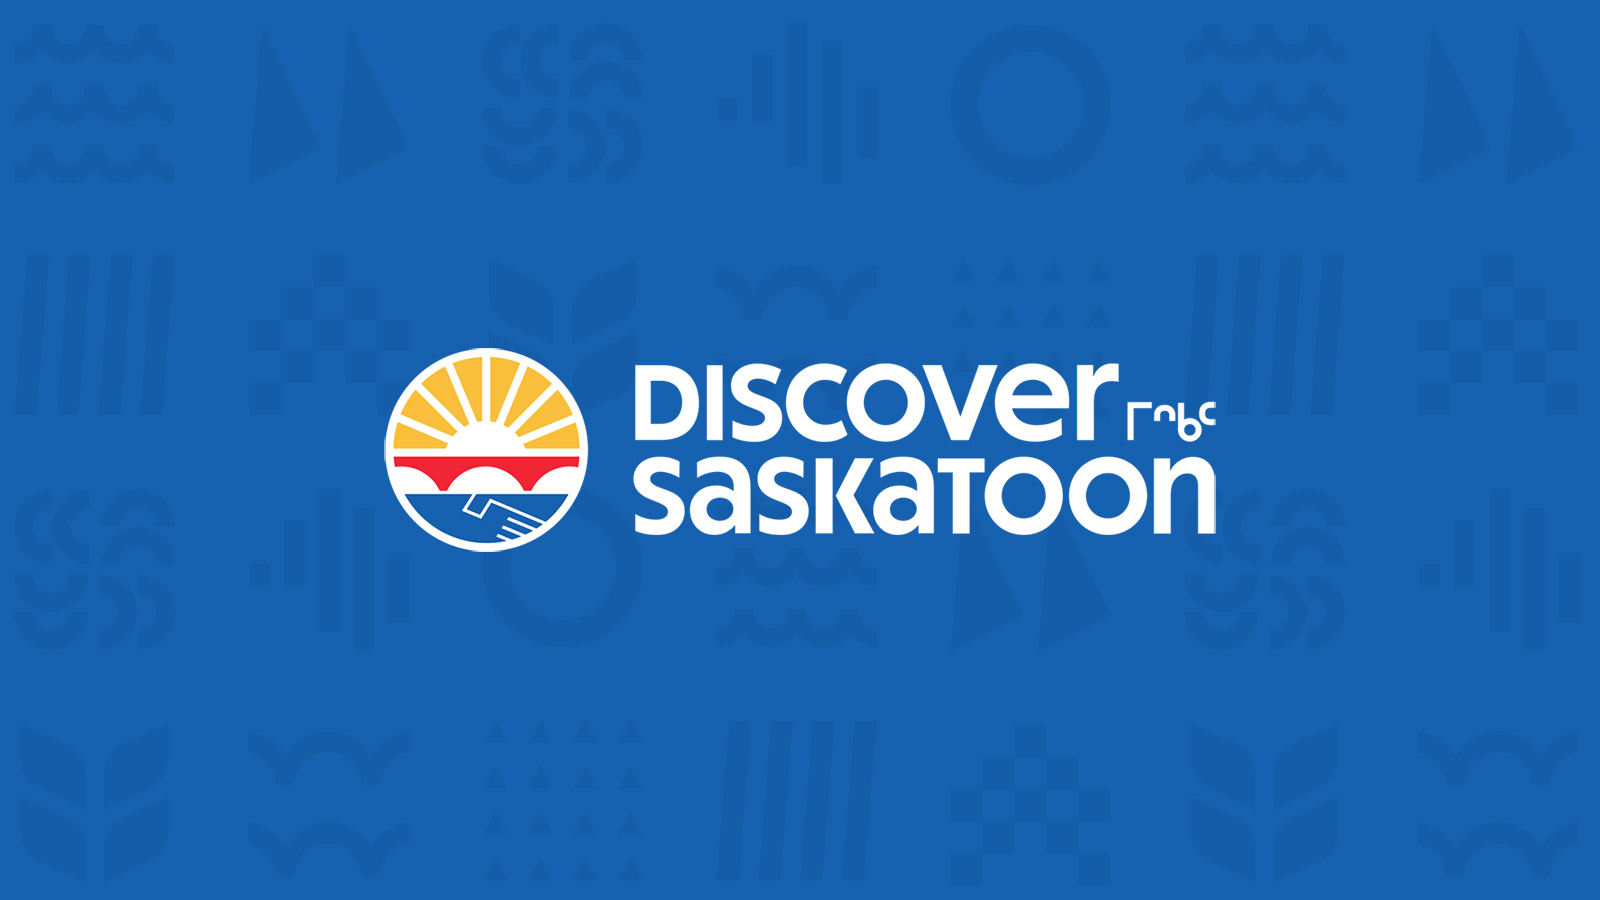 Discover Saskatoon rebrand breathes new life into our diverse city